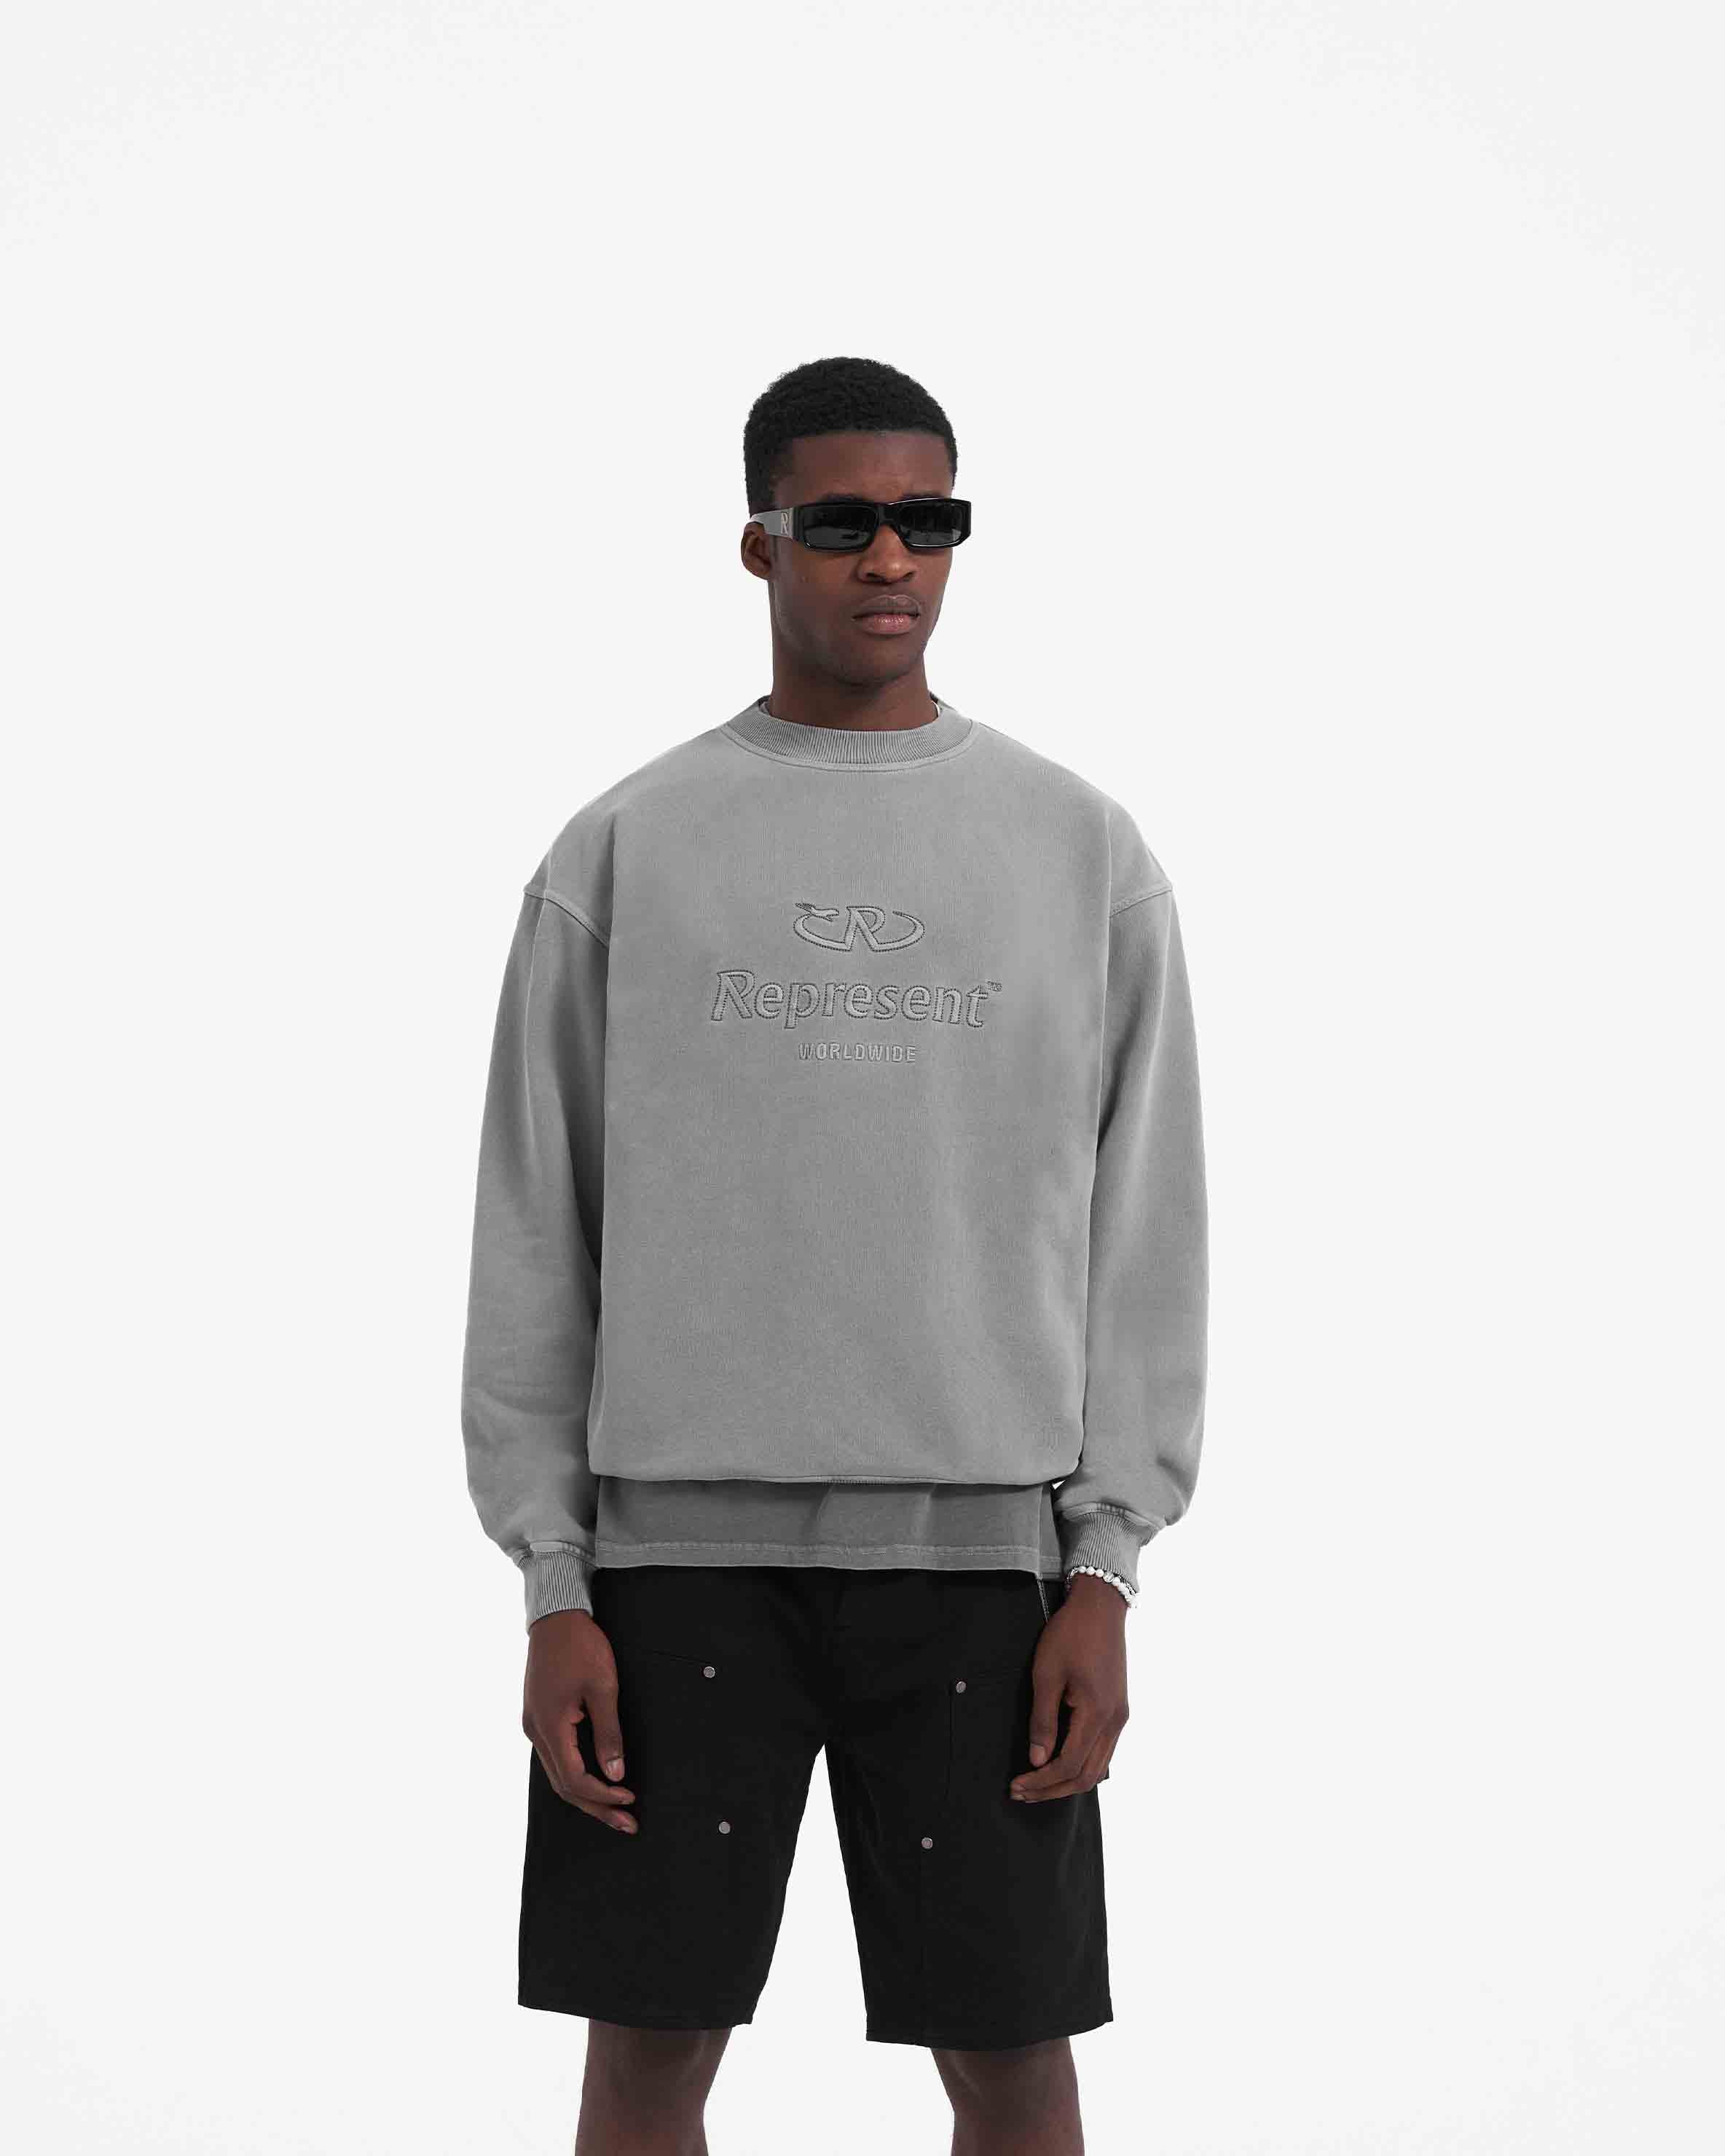 Worldwide Sweater | Ultimate Grey Sweaters SC23 | Represent Clo